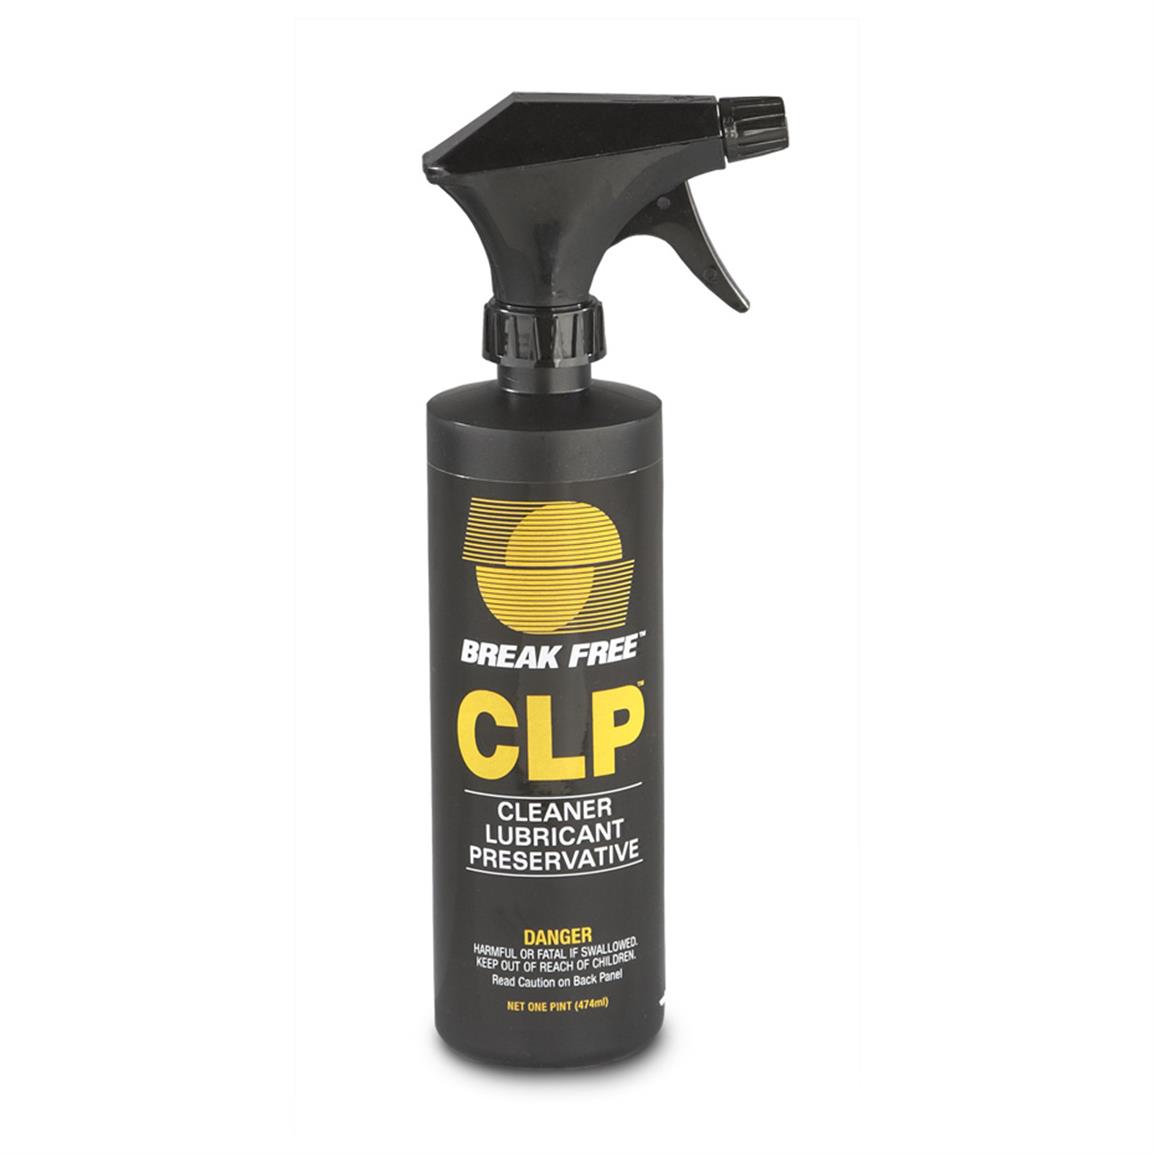 Break-Free CLP 16-oz. Gun Cleaner / Lubricant / Preservative